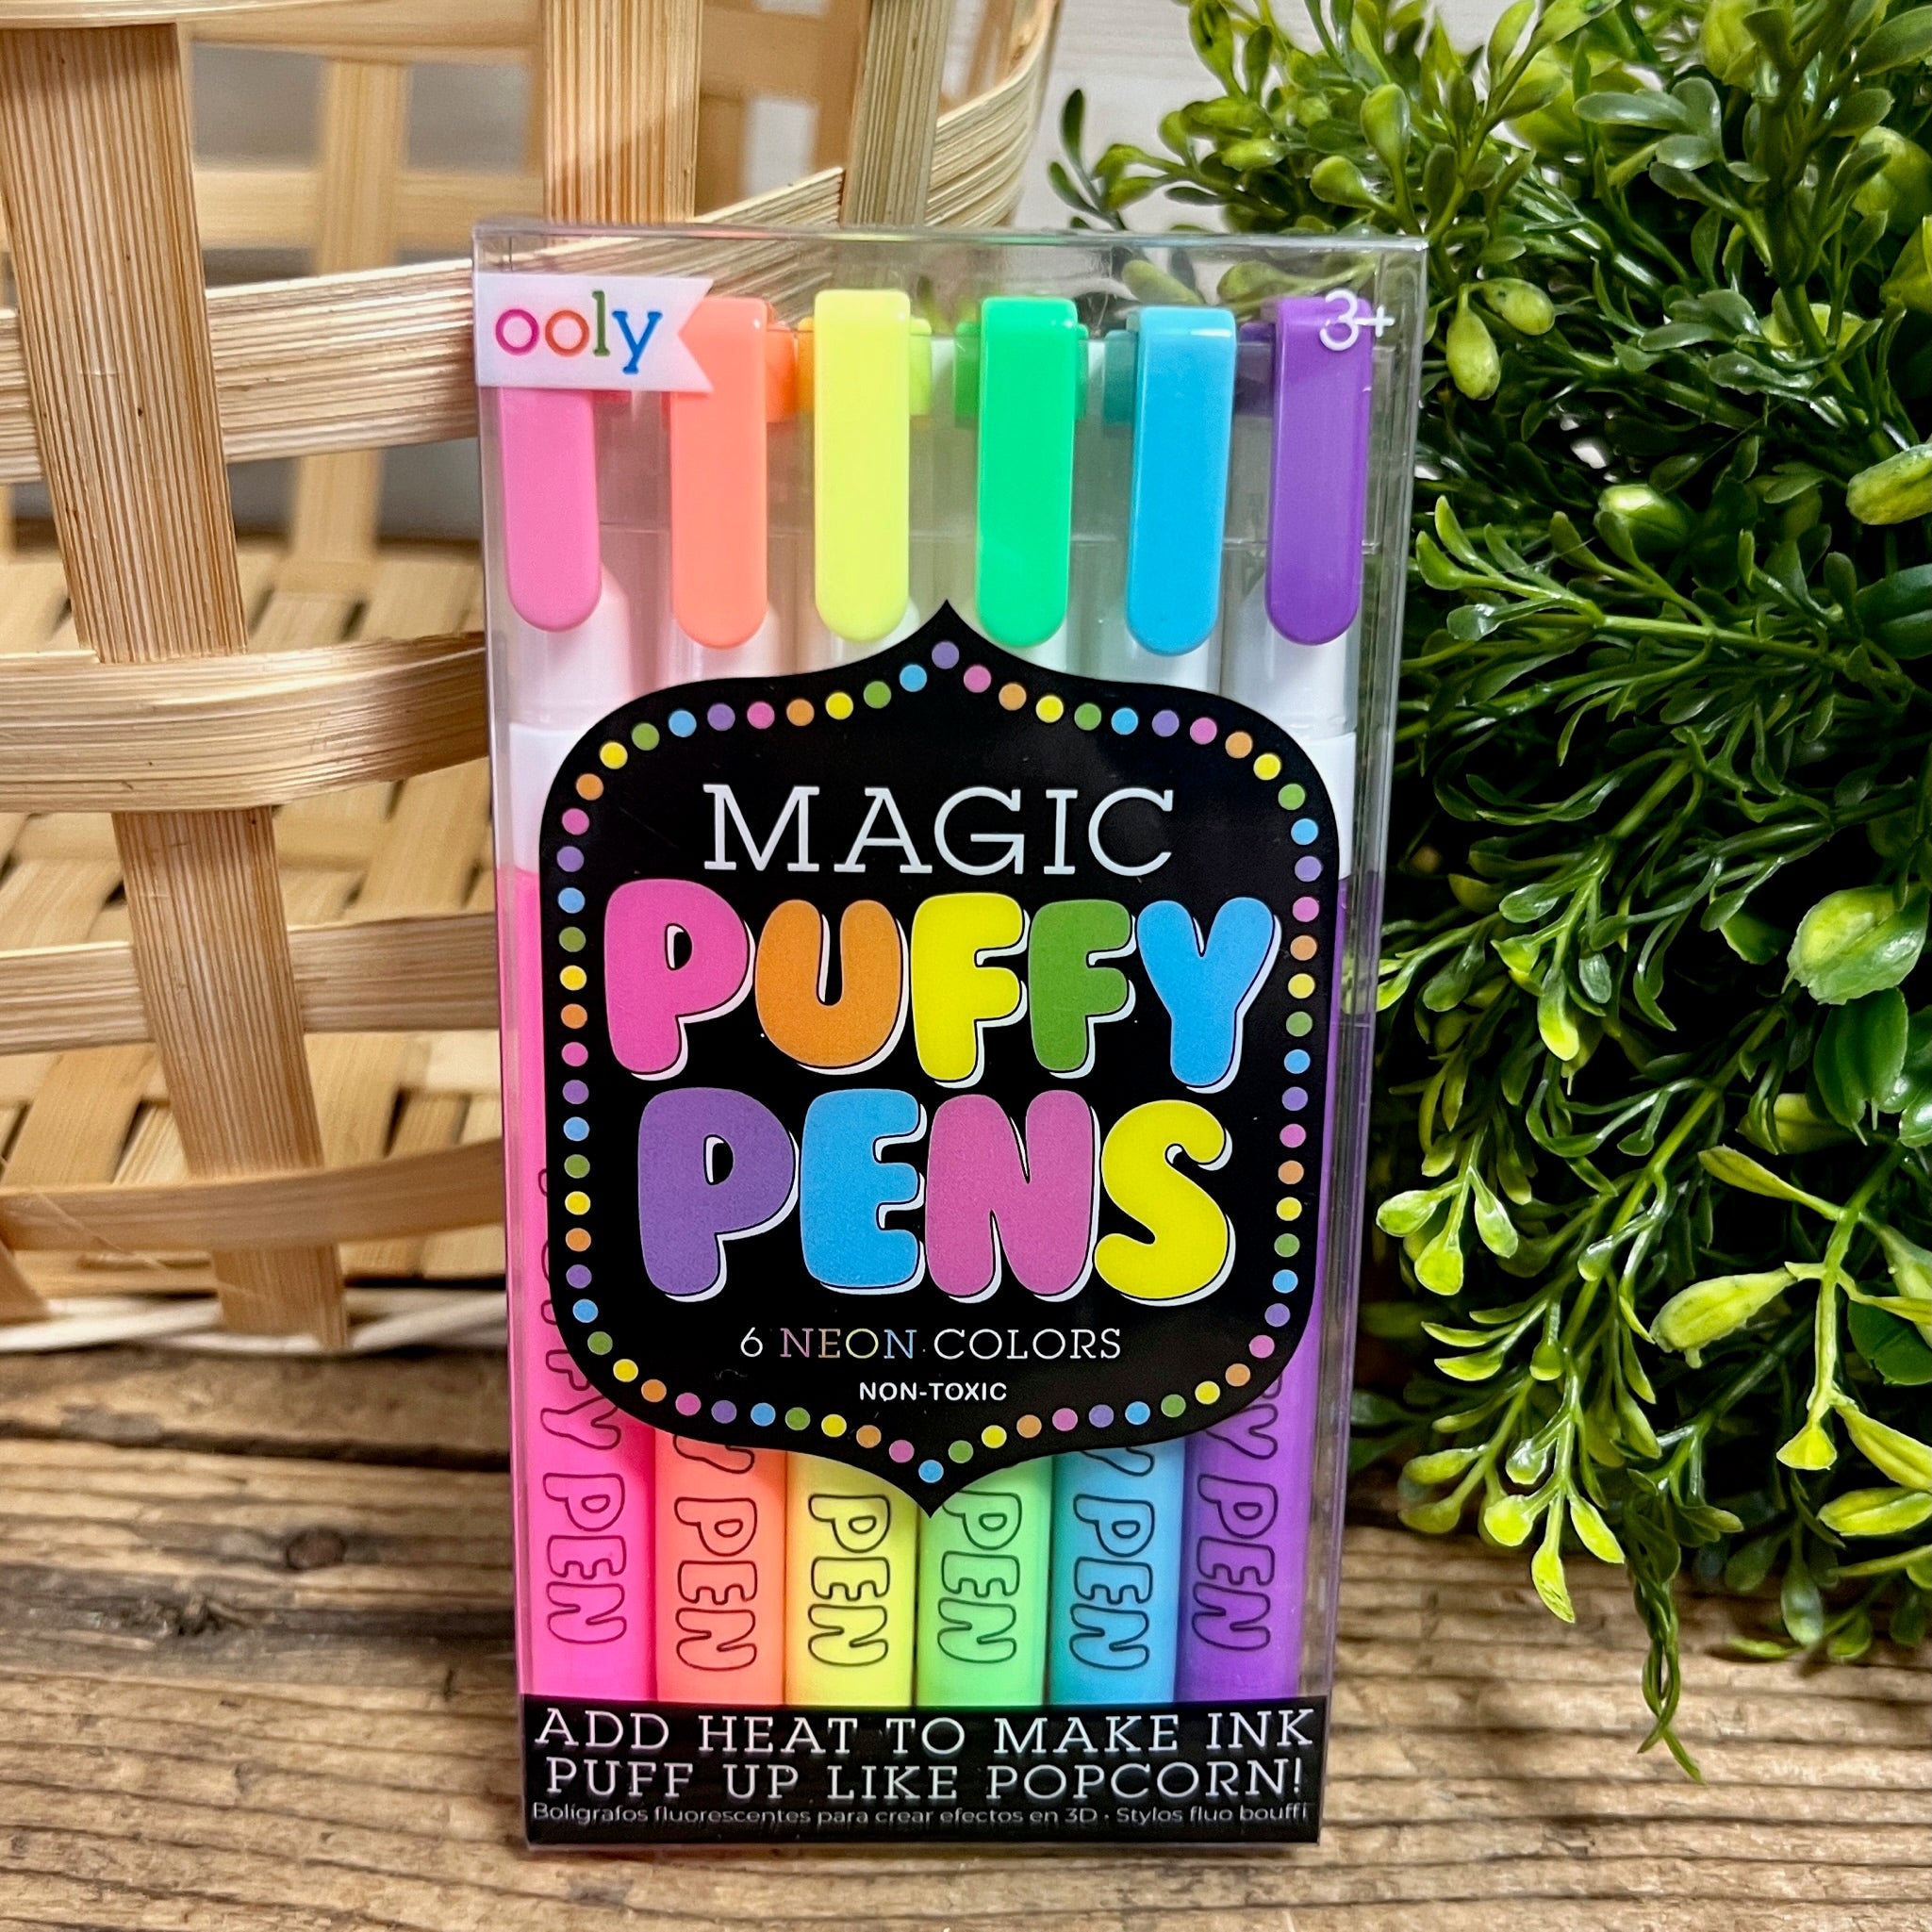 ooly Magic Puffy Pens